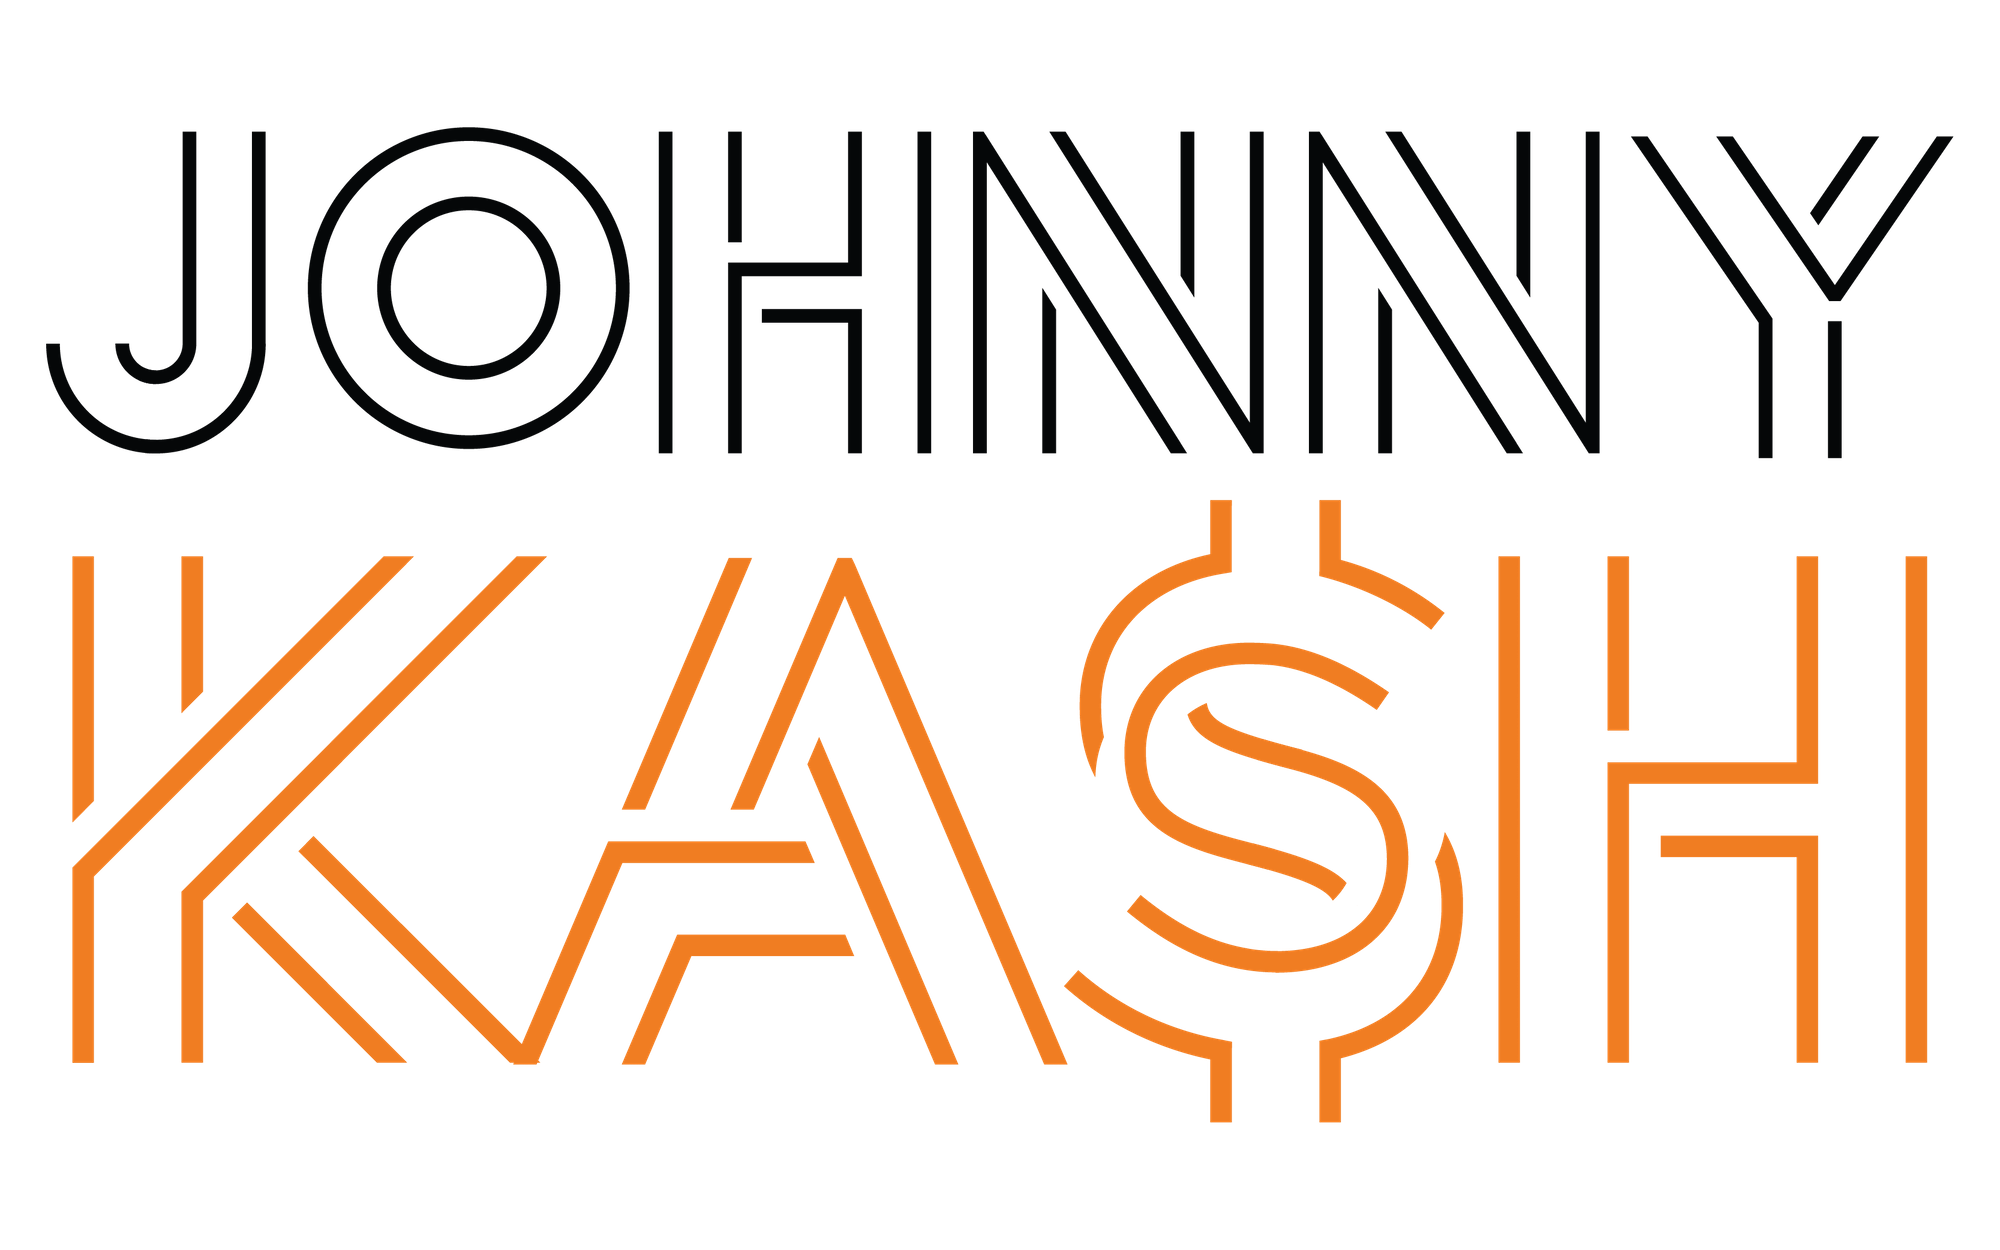 johnny kash logo